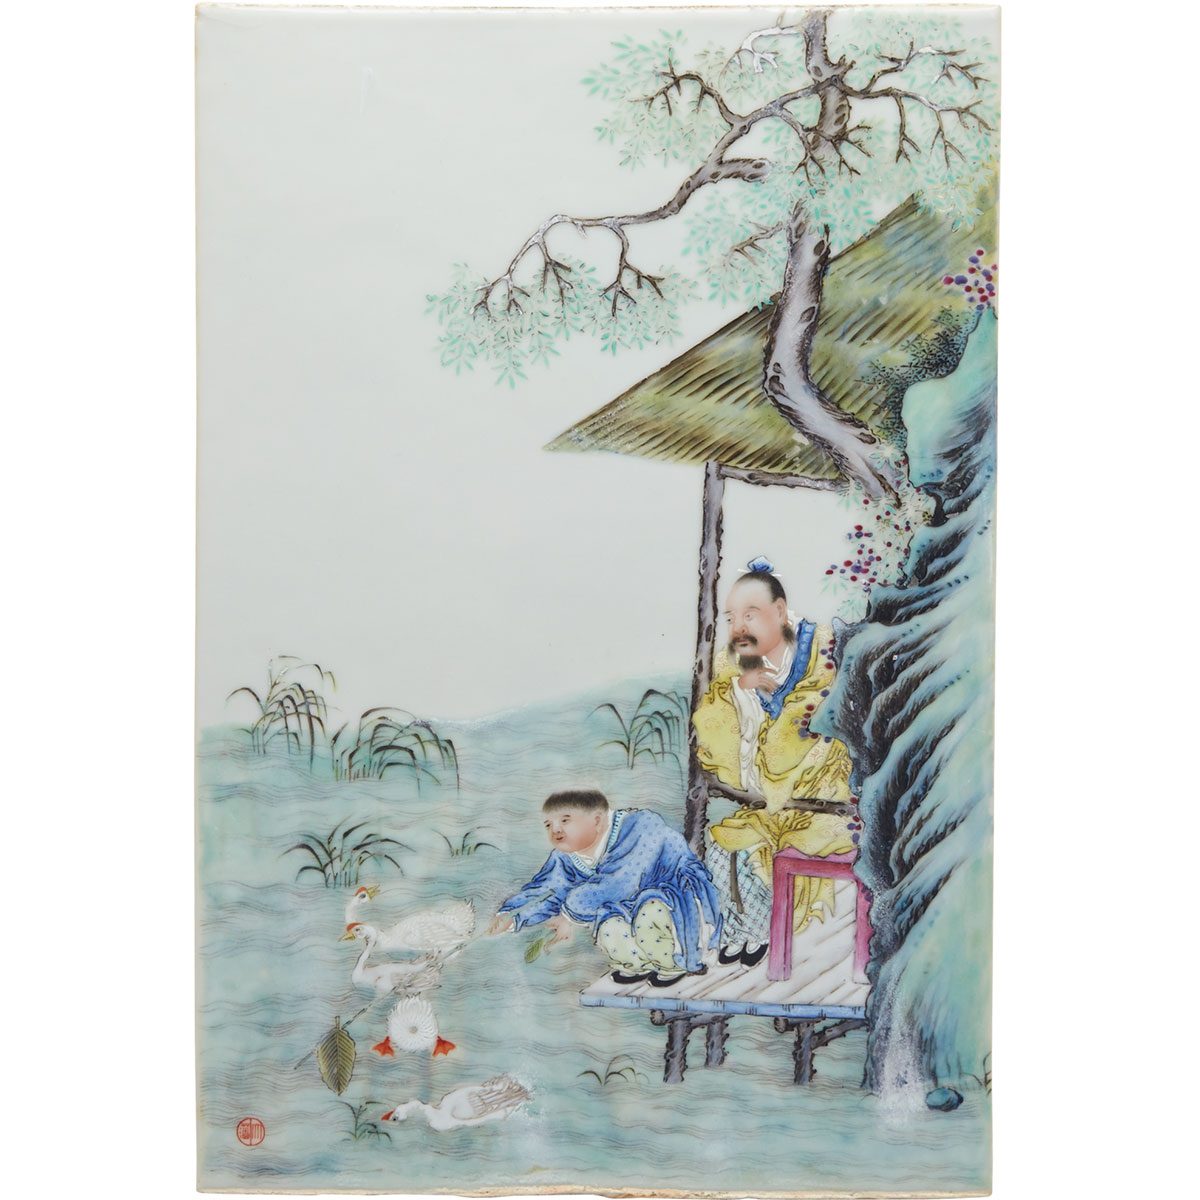 Attributed to Wang Dafan (1888-1961)